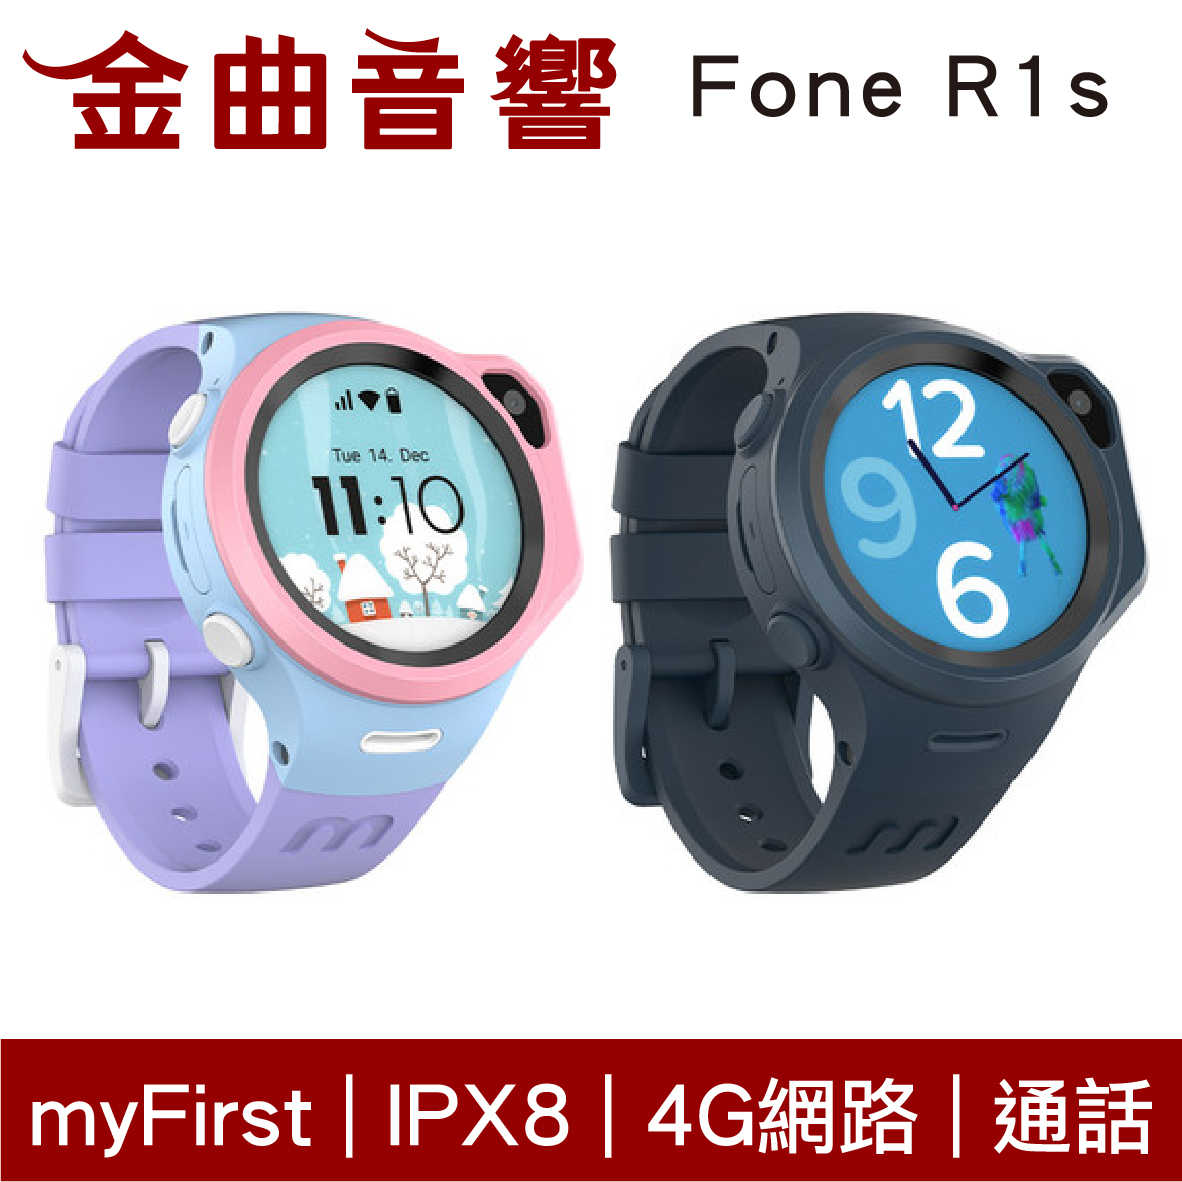 myFirst Fone R1s 心率偵測 視訊通話 IP68 一鍵求救 4G 智慧兒童手錶 | 金曲音響